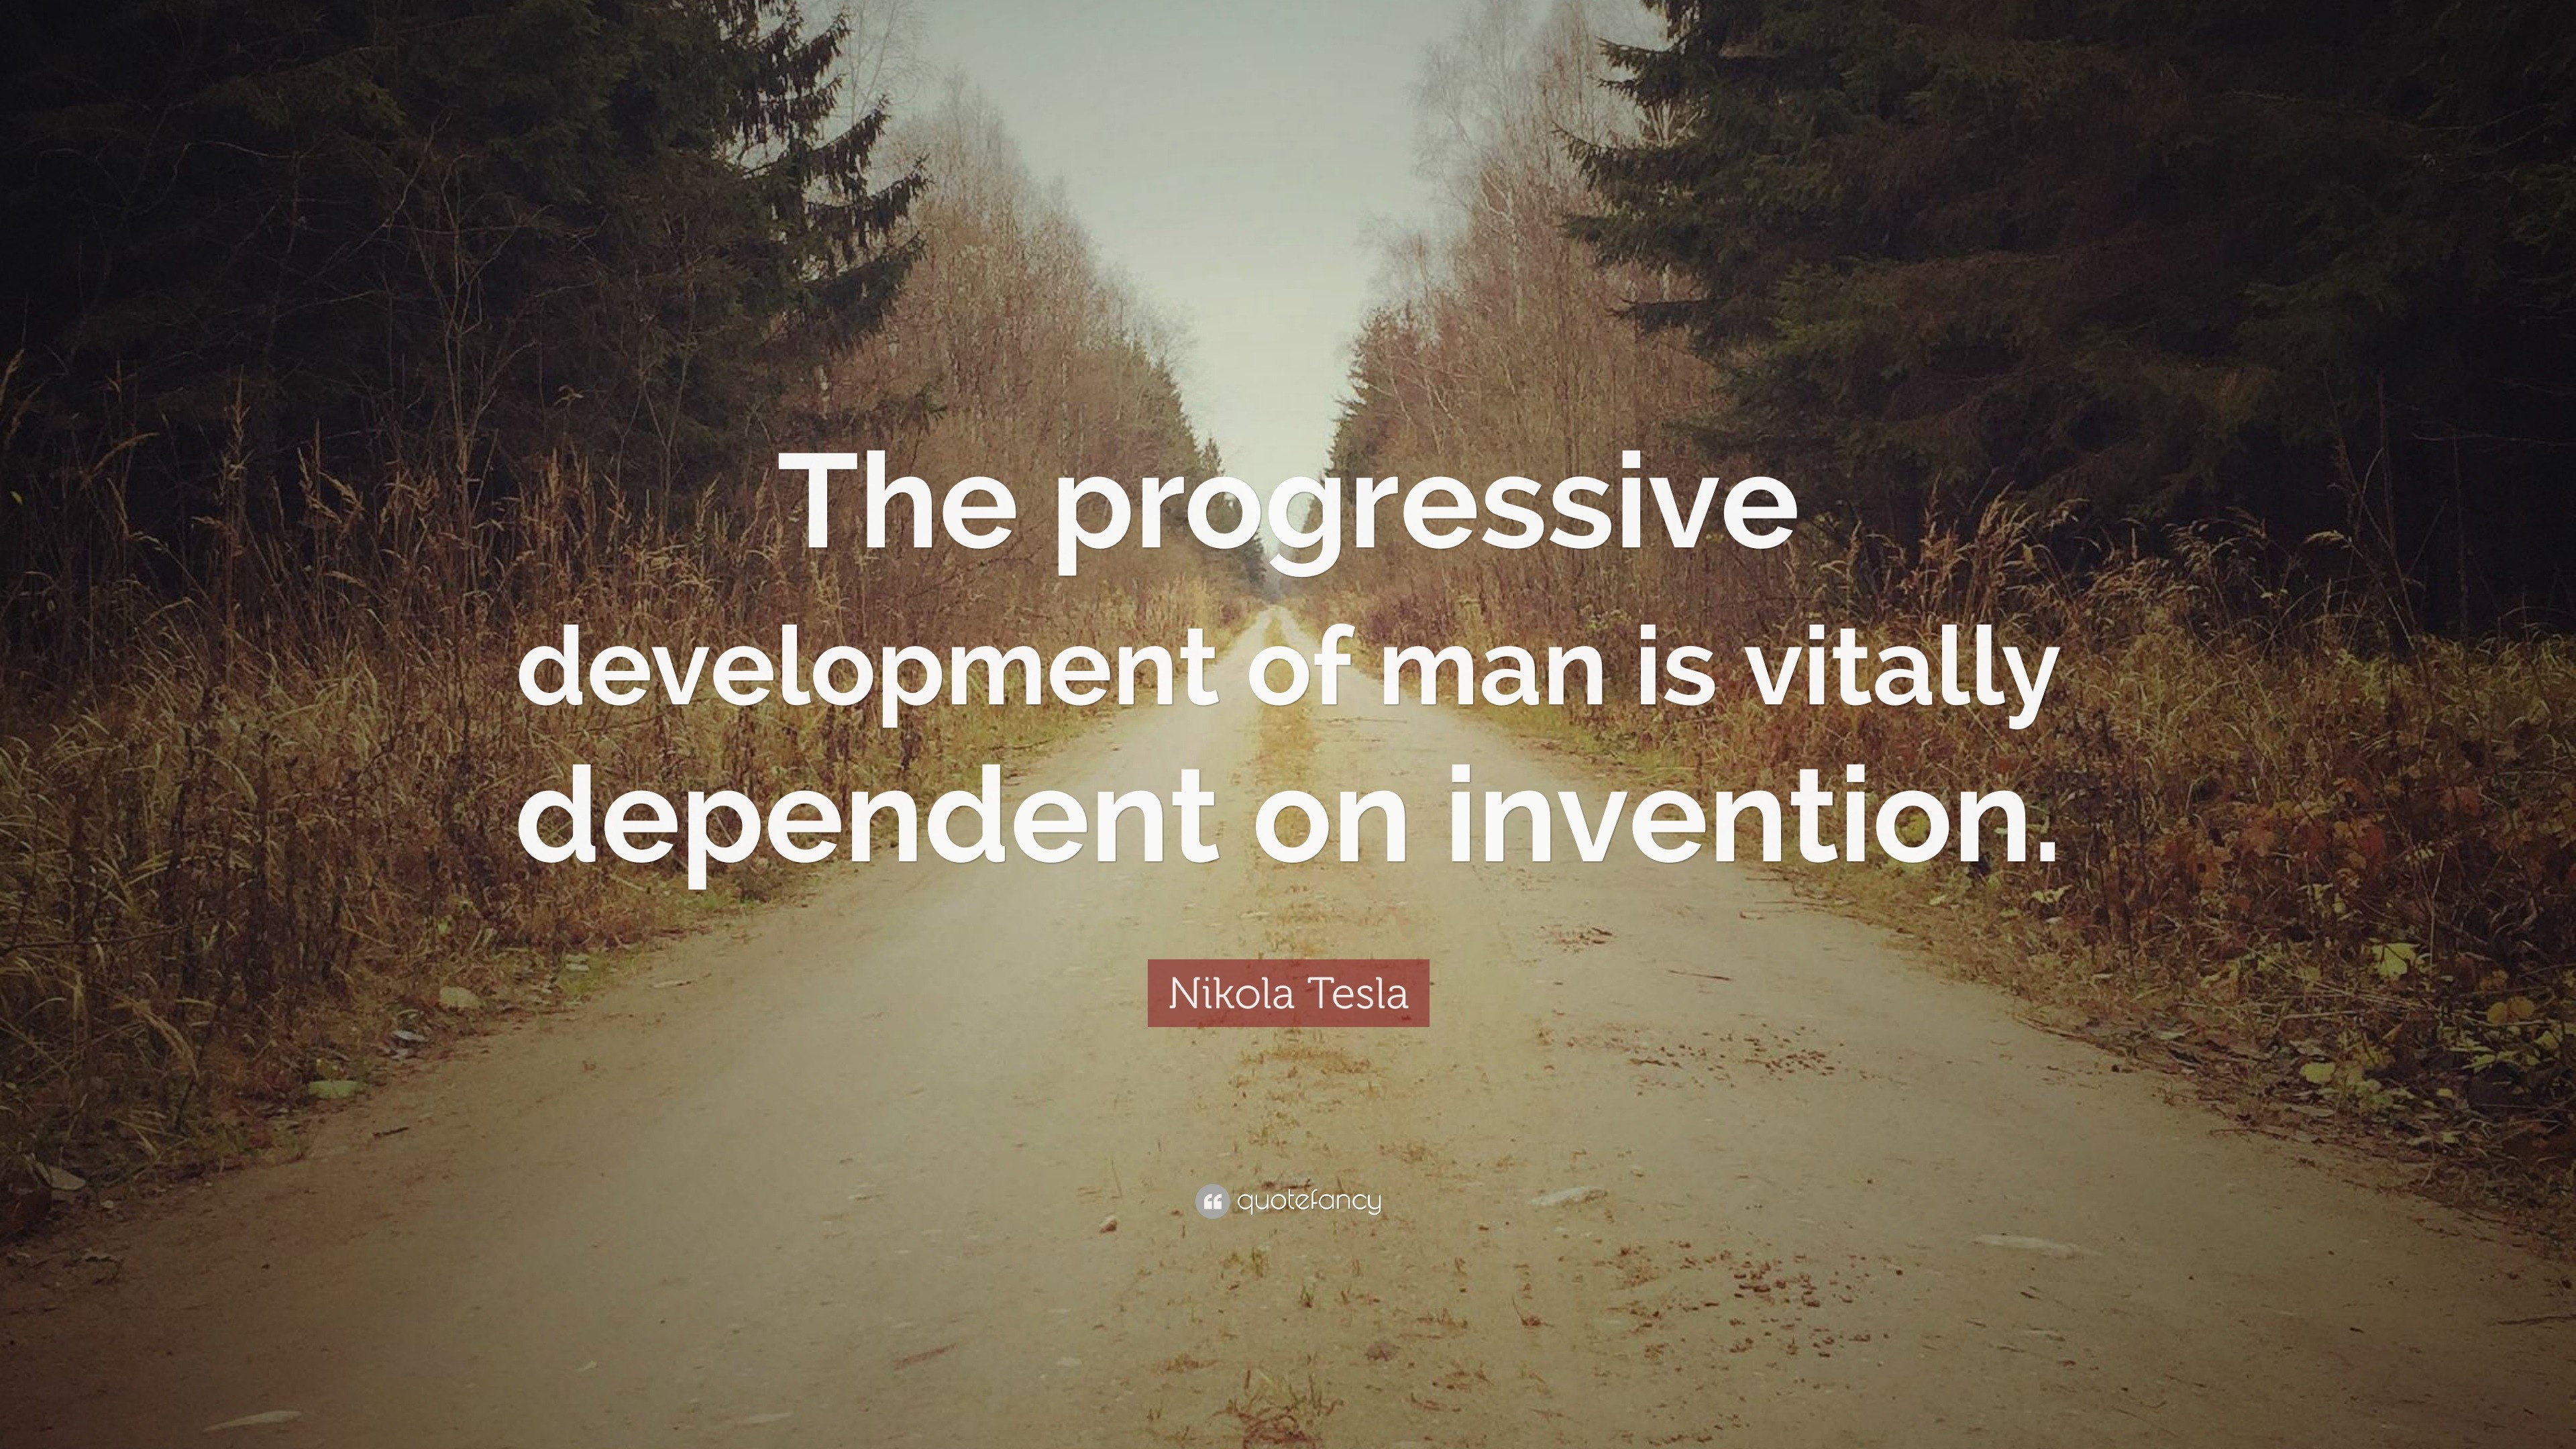 Nikola Tesla Quote “The progressive development of man is